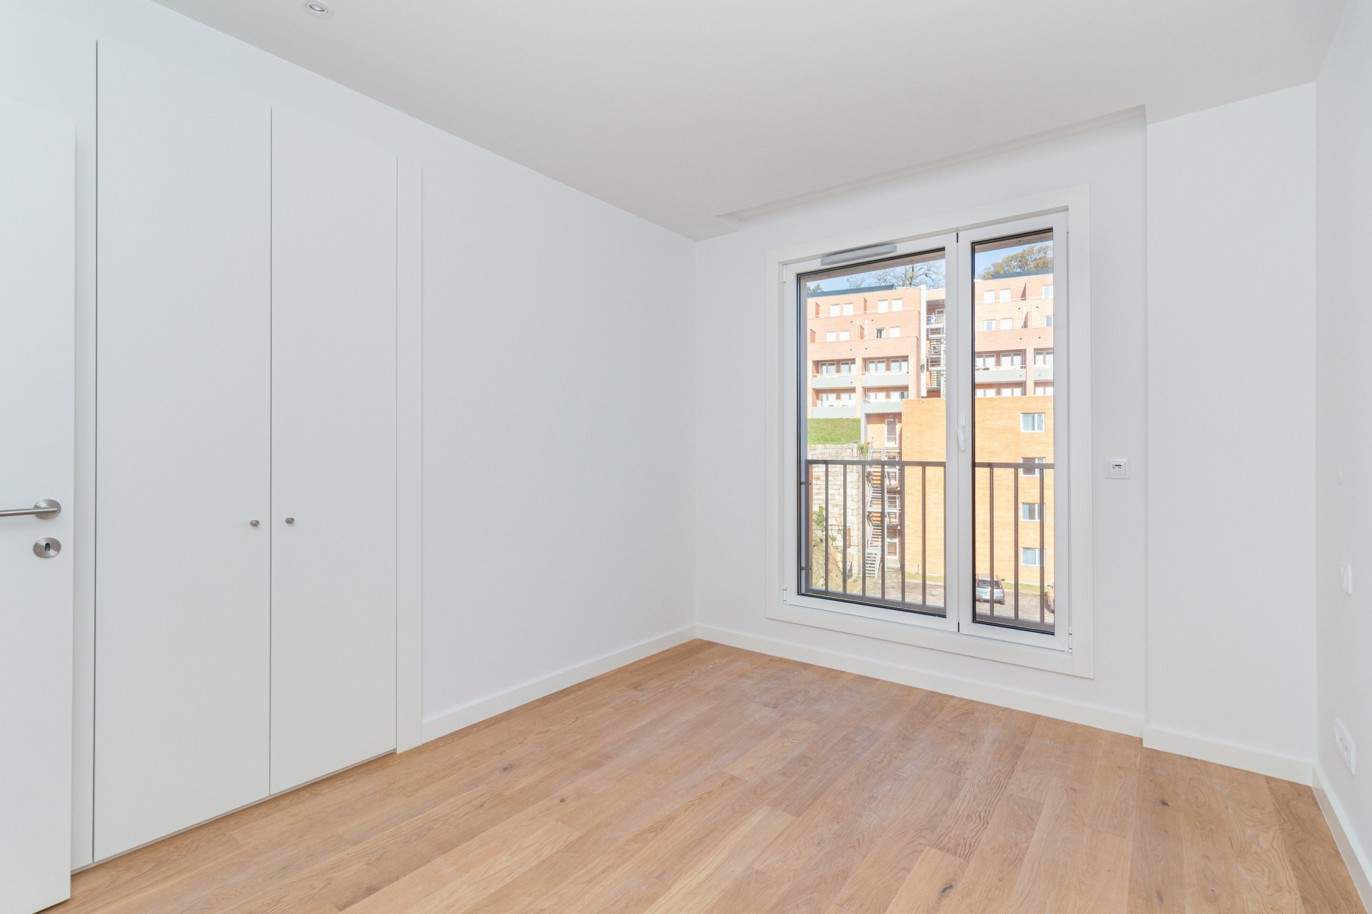 New 3 bedroom apartament with balcony, for sale, Porto, Portugal_213040